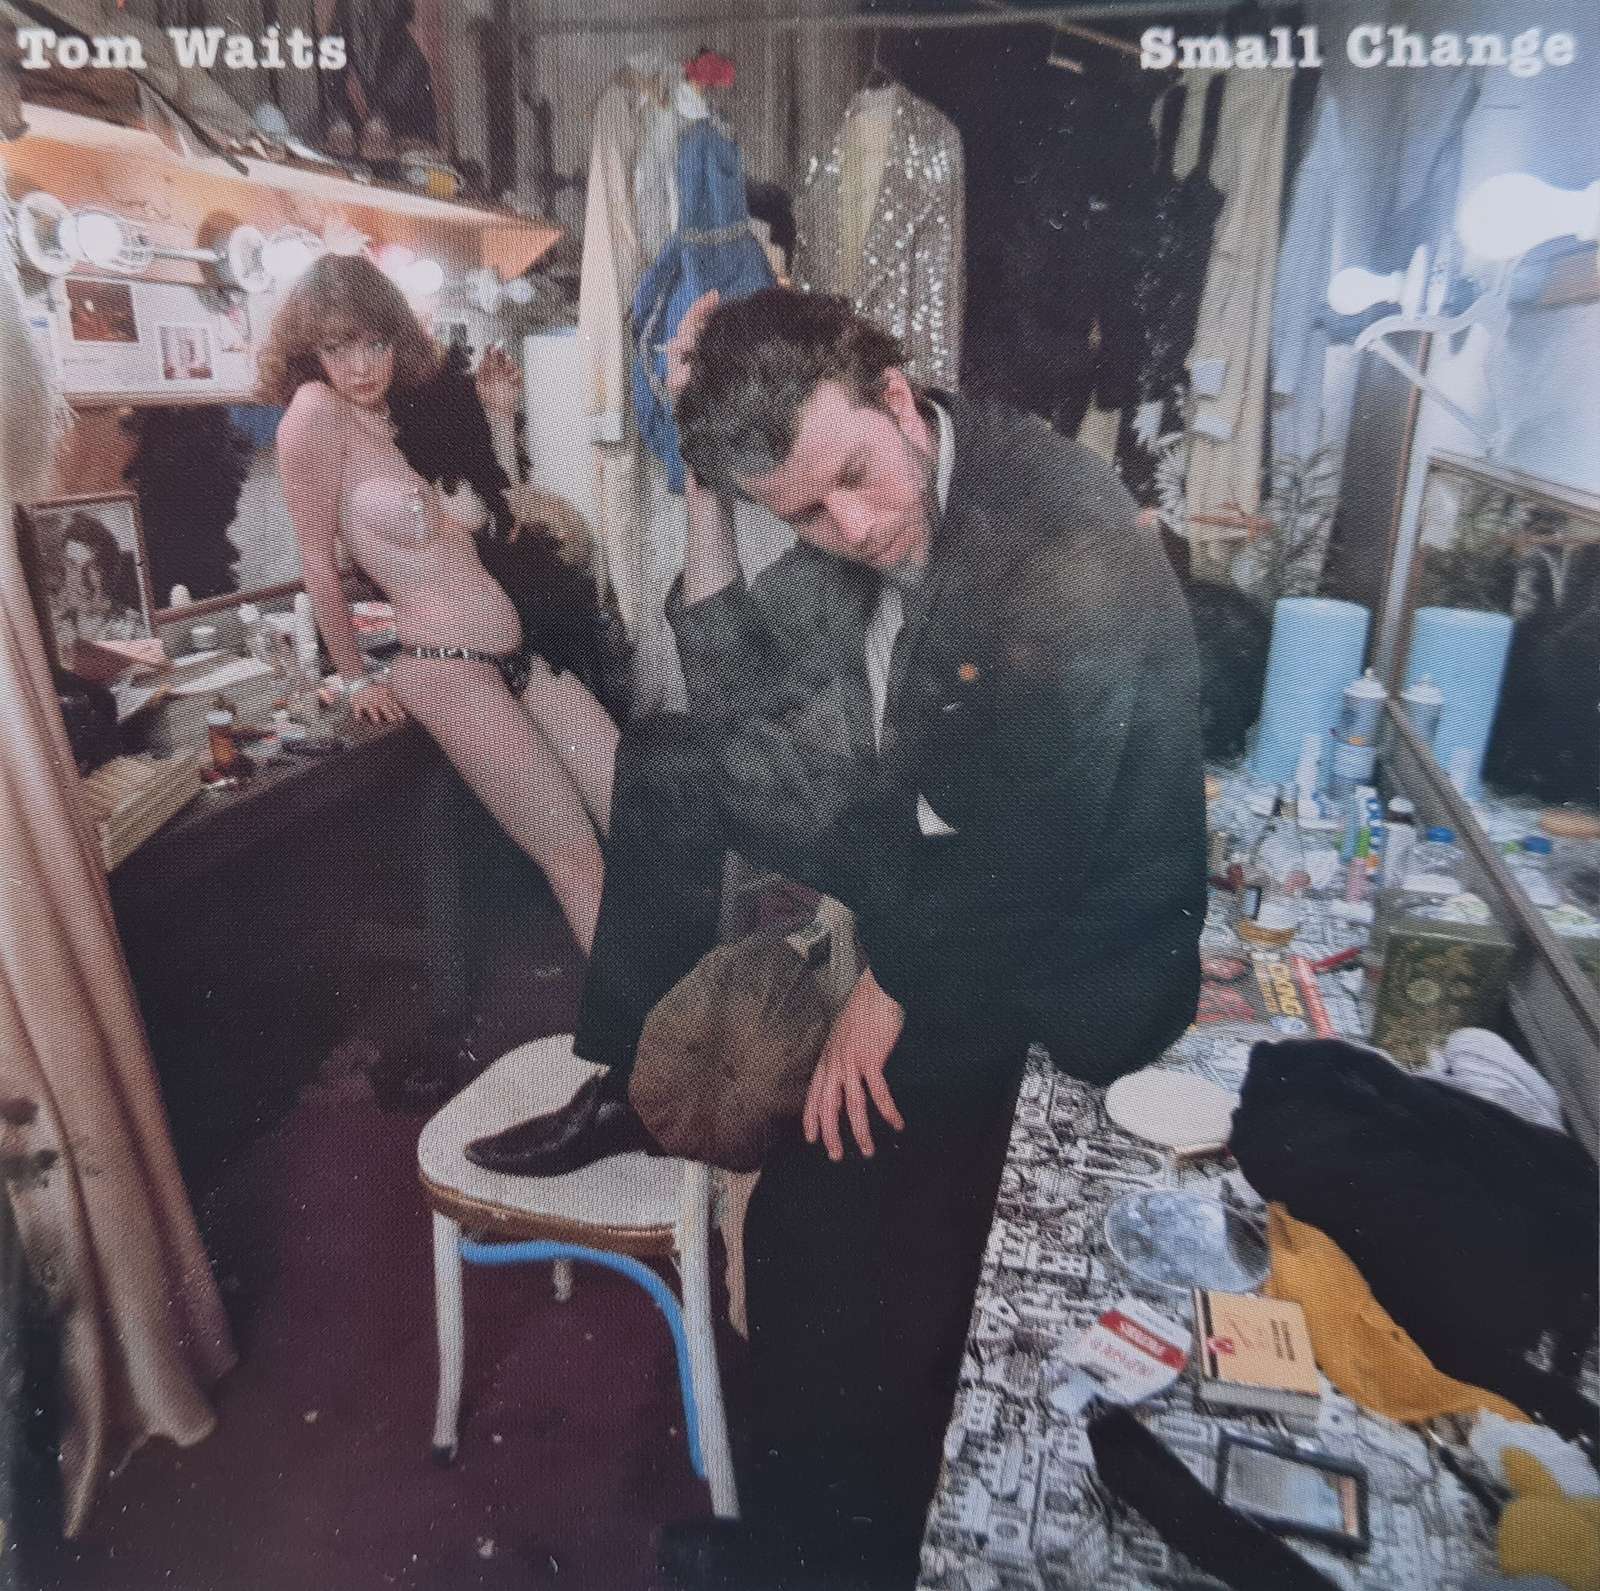 Tom Waits - Small Change CD